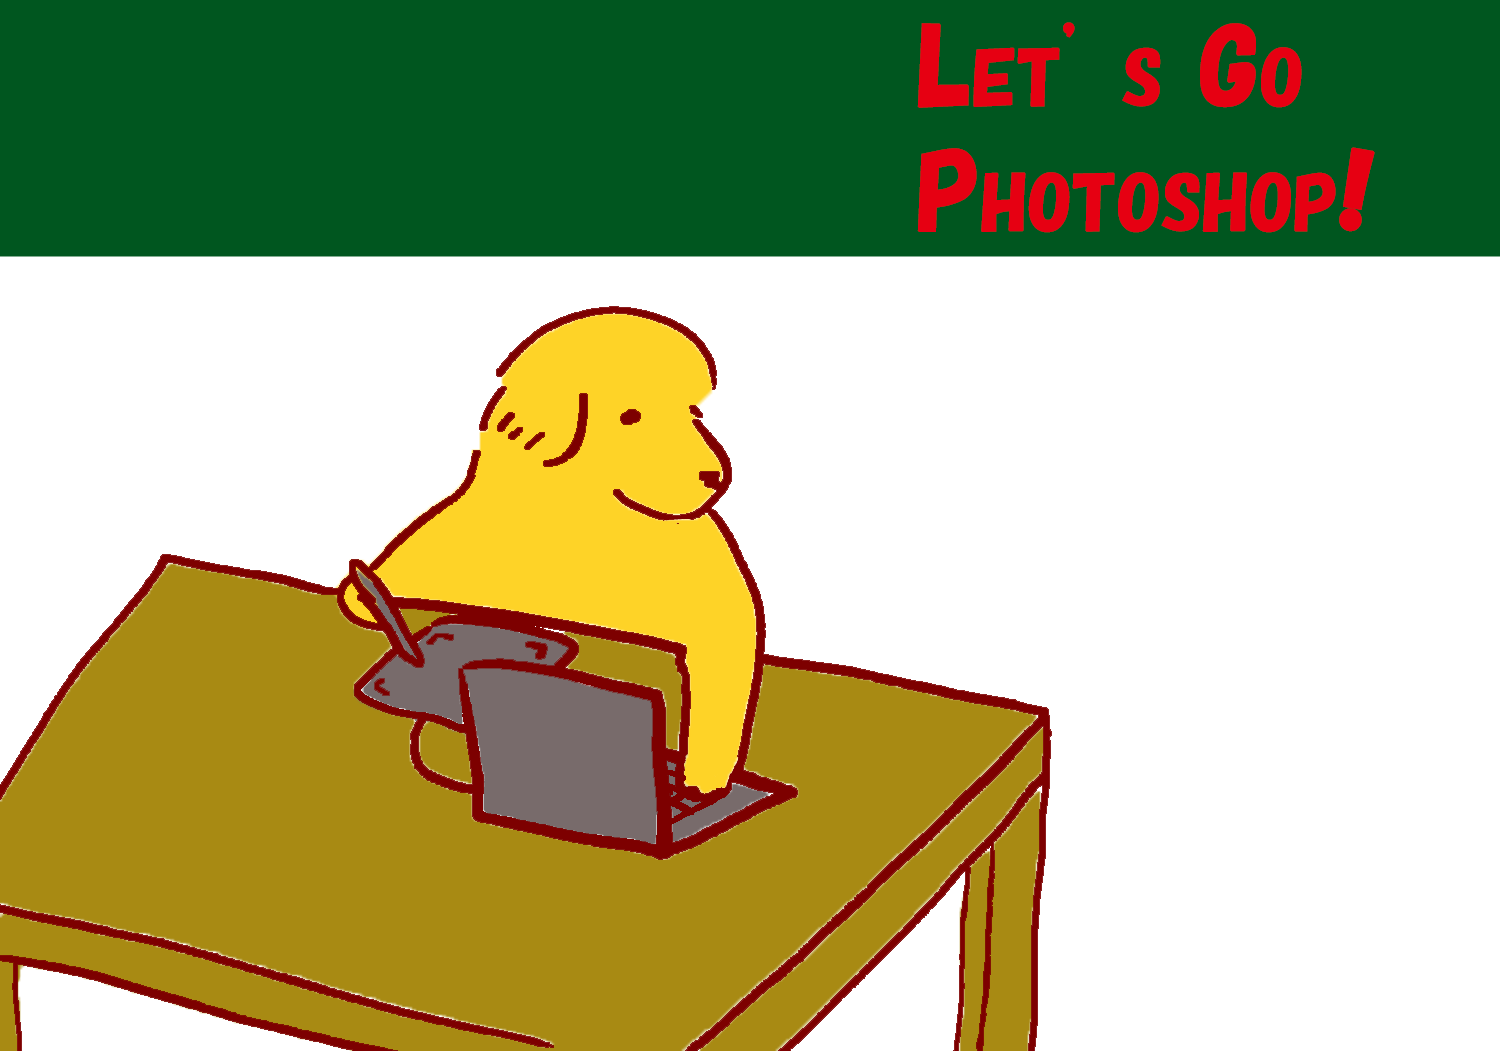 LET'S GO PHOTOSHOP!